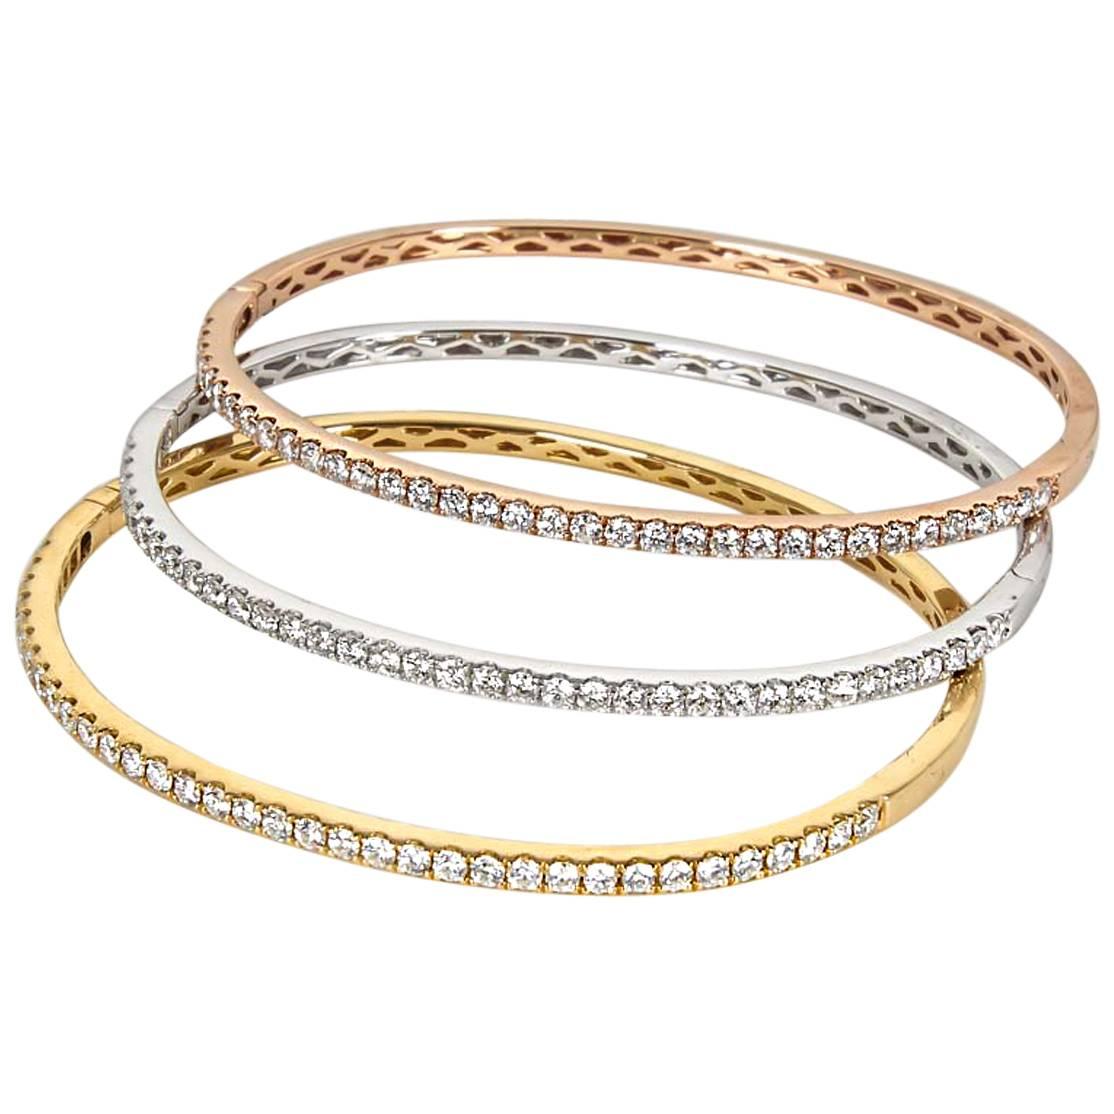 Set of Three Diamond White Yellow and Rose Gold Bangle Bracelets